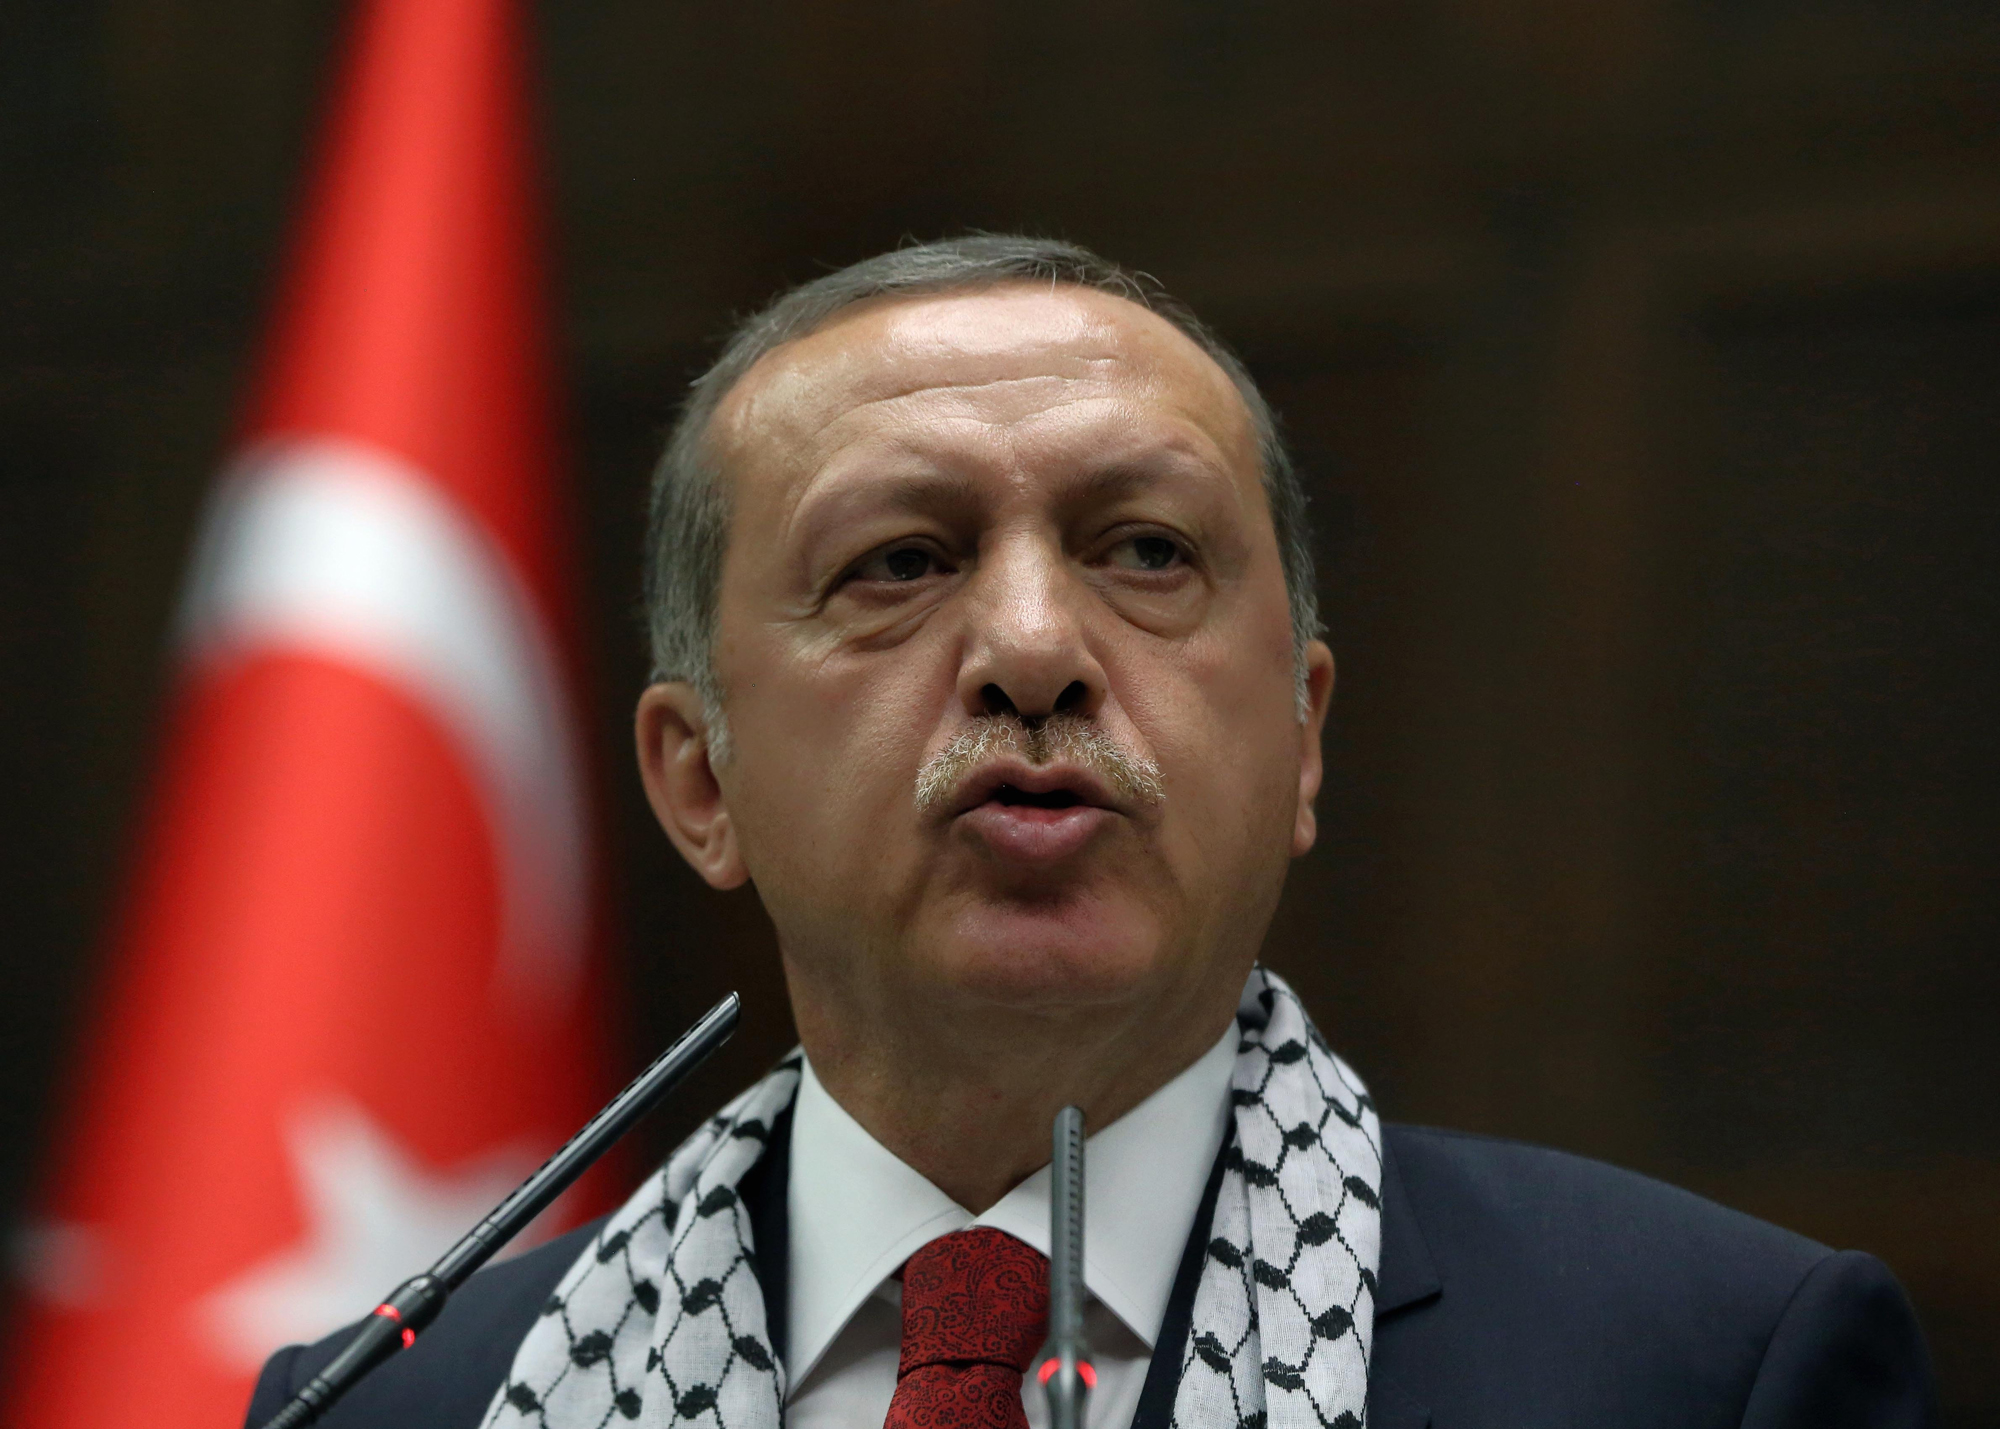 Turkish Prime Minister Recep Tayyip Erdogan addresses his supporters at parliament in Ankara, Turkey, July 22, 2014.